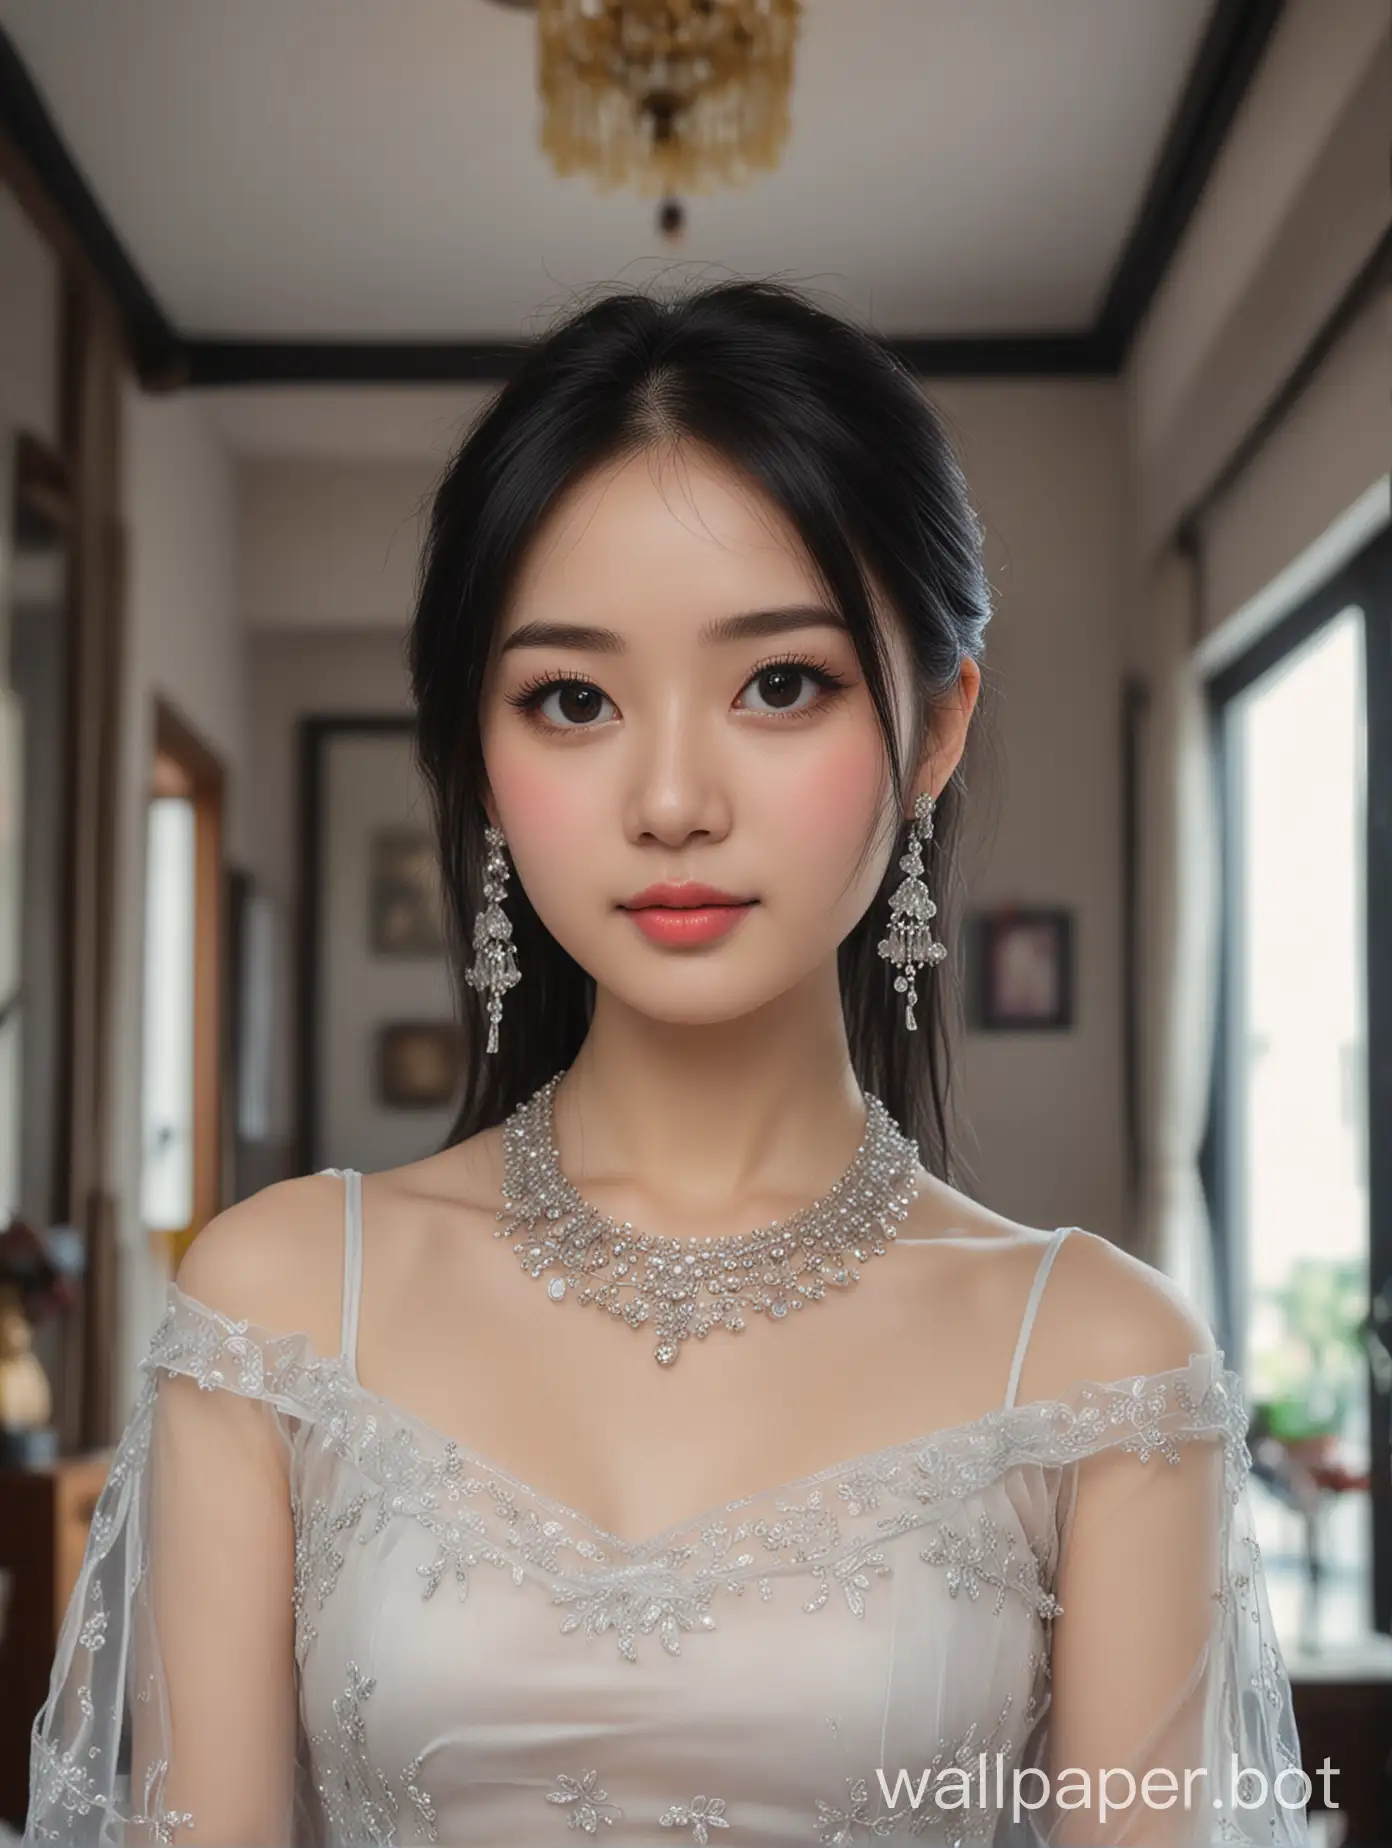 Anhui-Actress-in-Elegant-Aline-Dress-Modern-House-Portrait